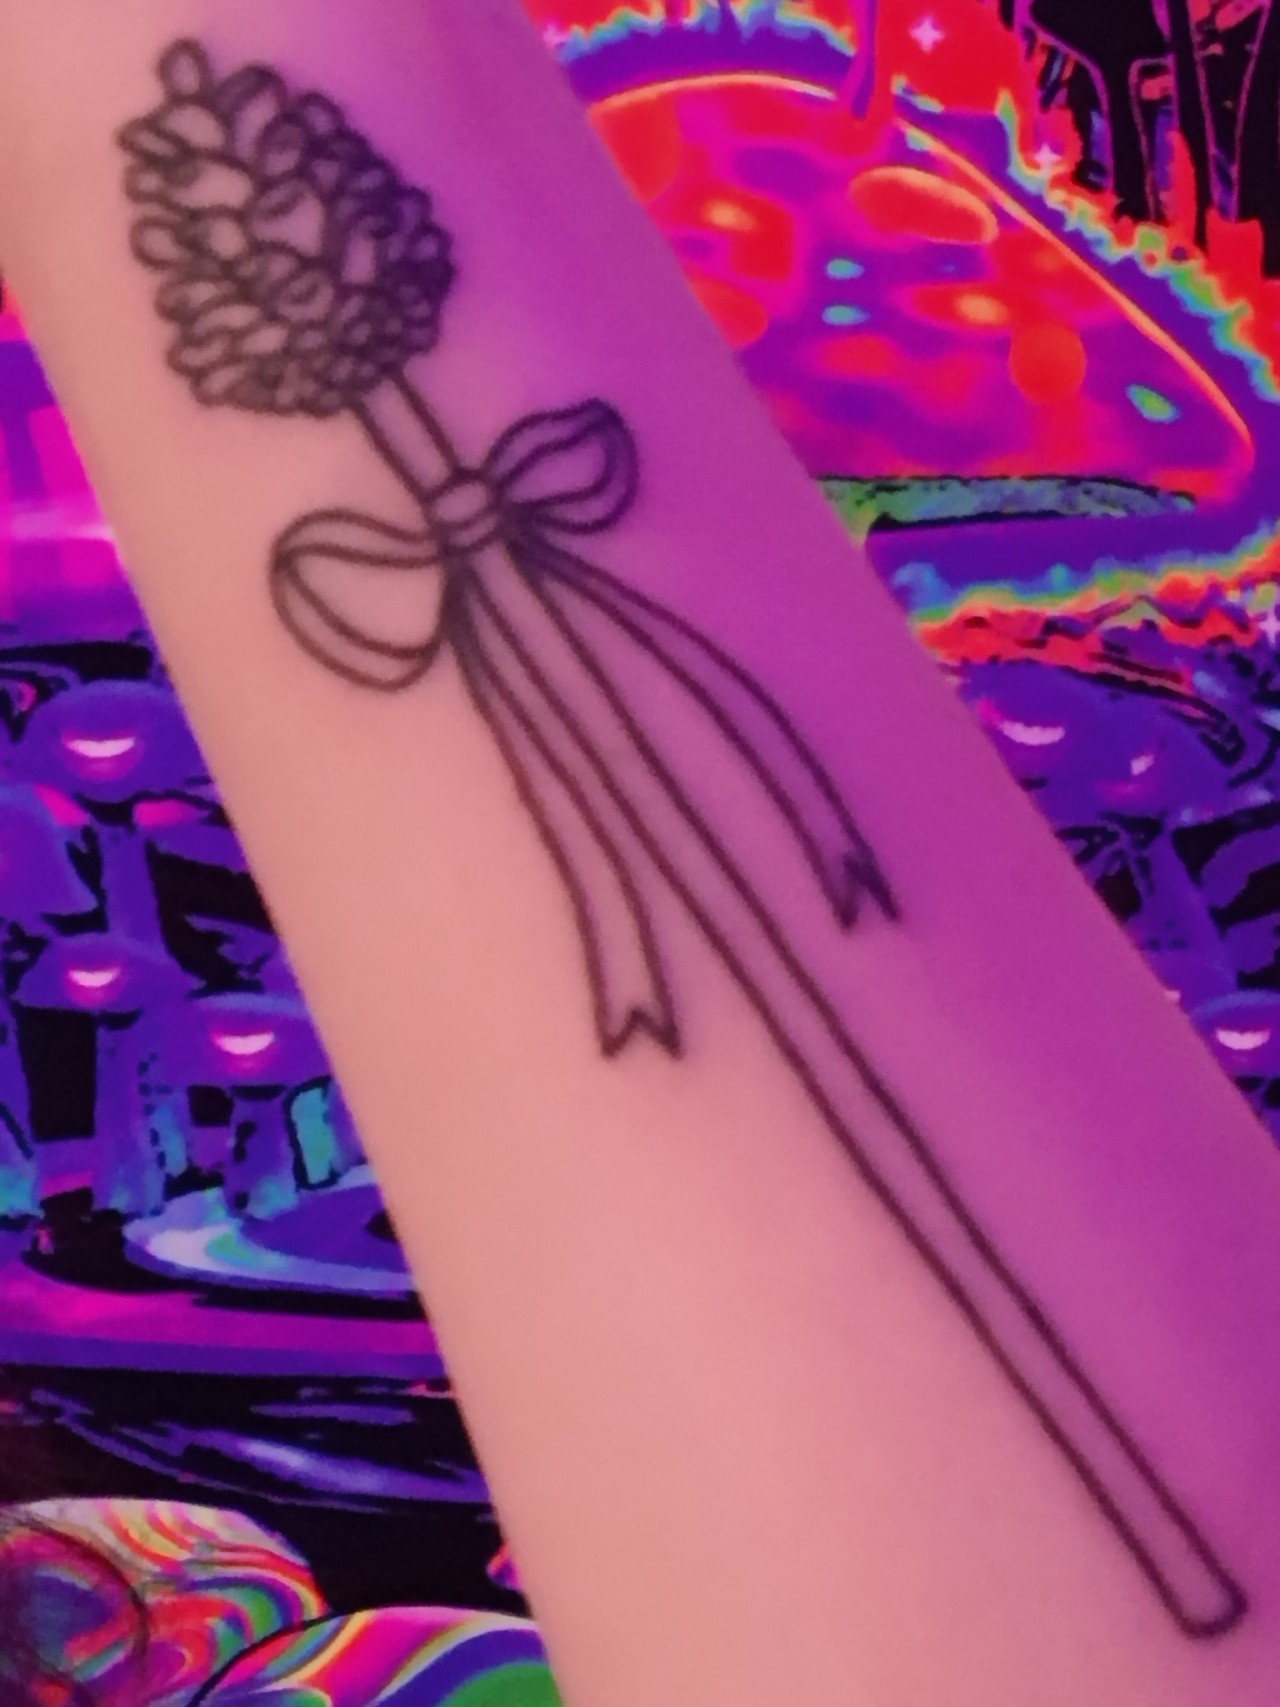 Come watch me tattoo a fennel bulb on the wonderful Ariana. | Instagram